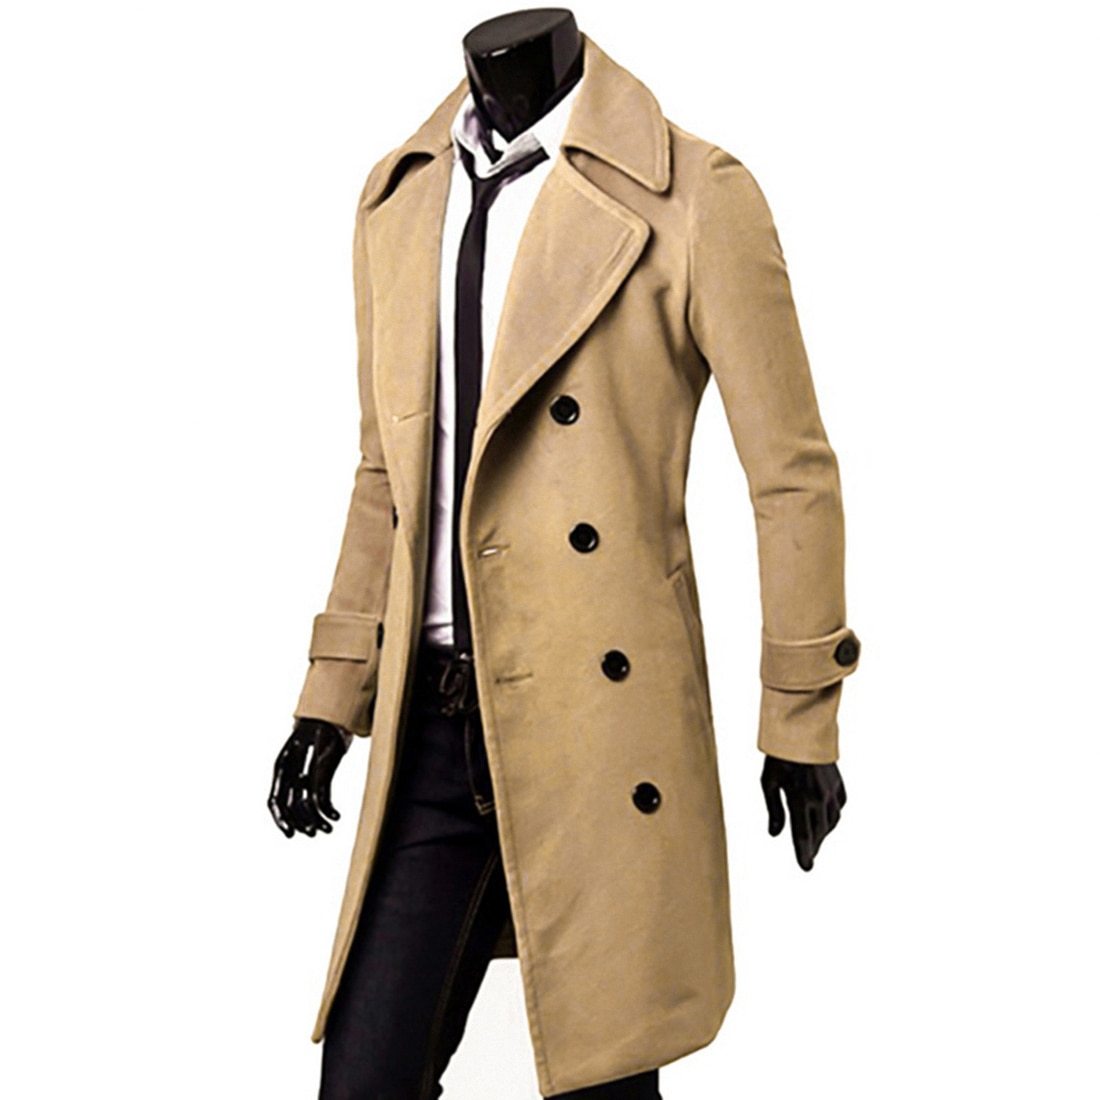 US$ 43.62 - 2020 New Arrivals Autumn Winter Trench Coat Men Brand ...